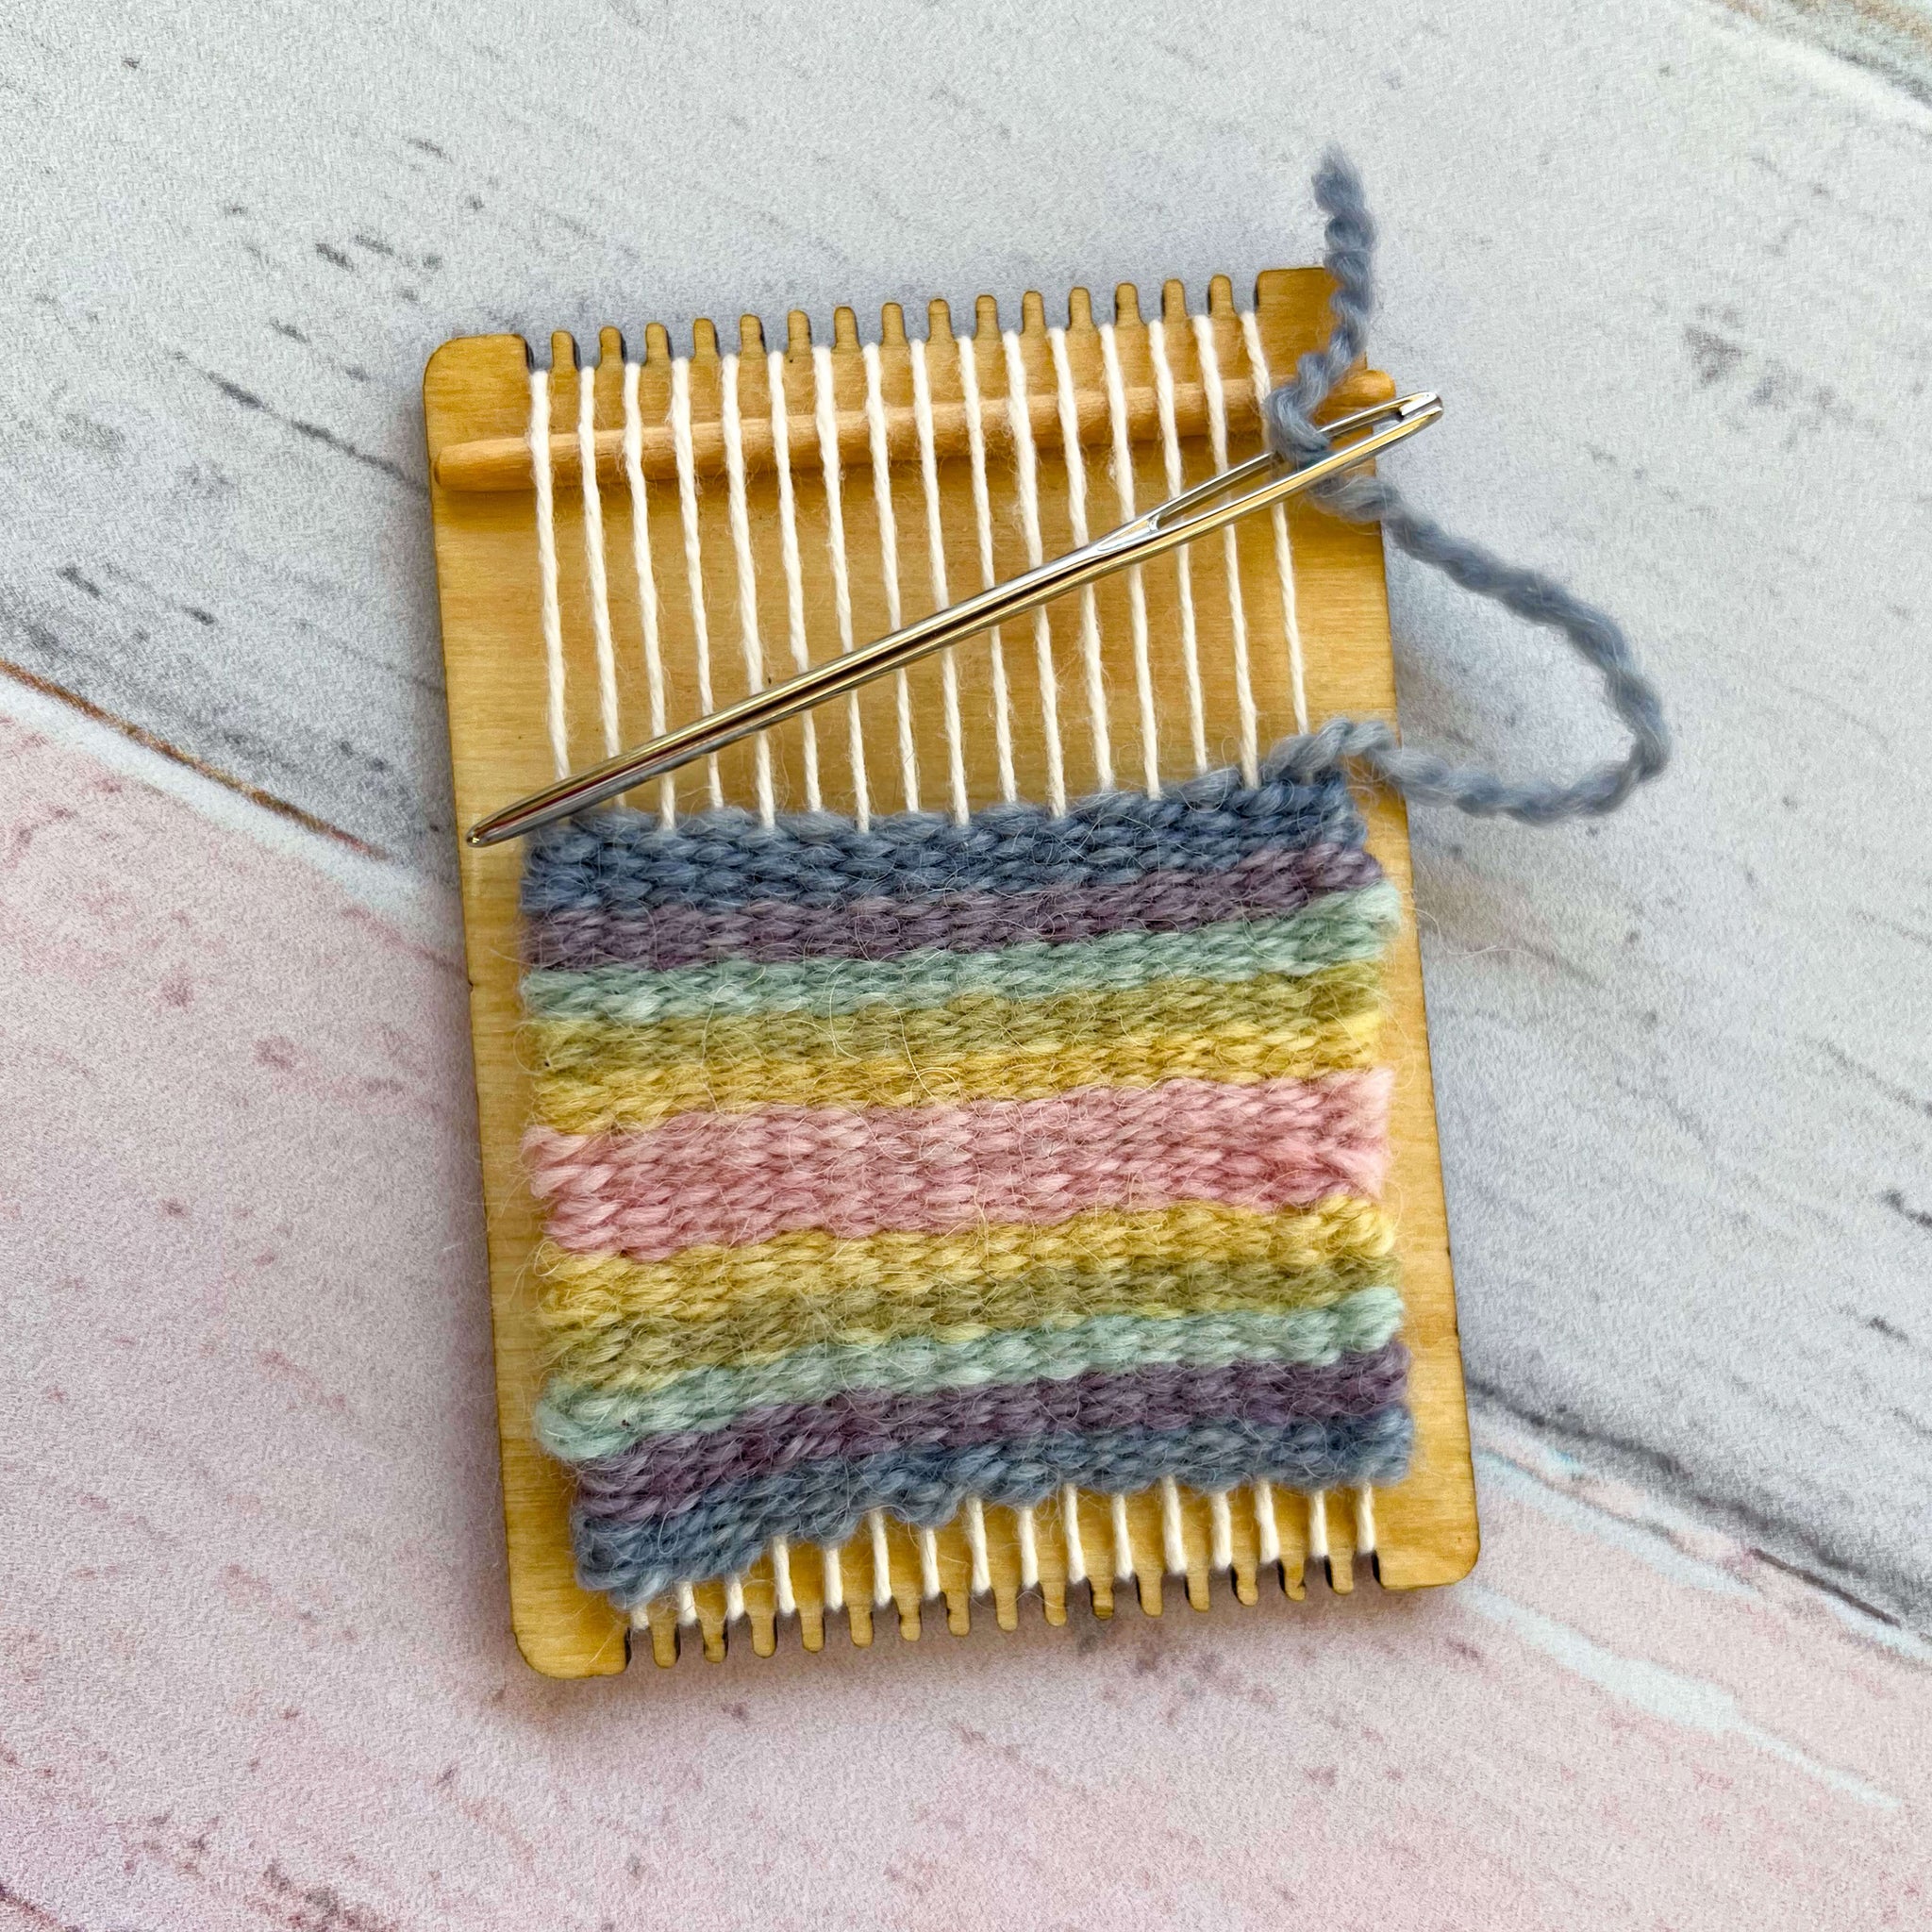 Small Loom Projects eBook - Knitting Board